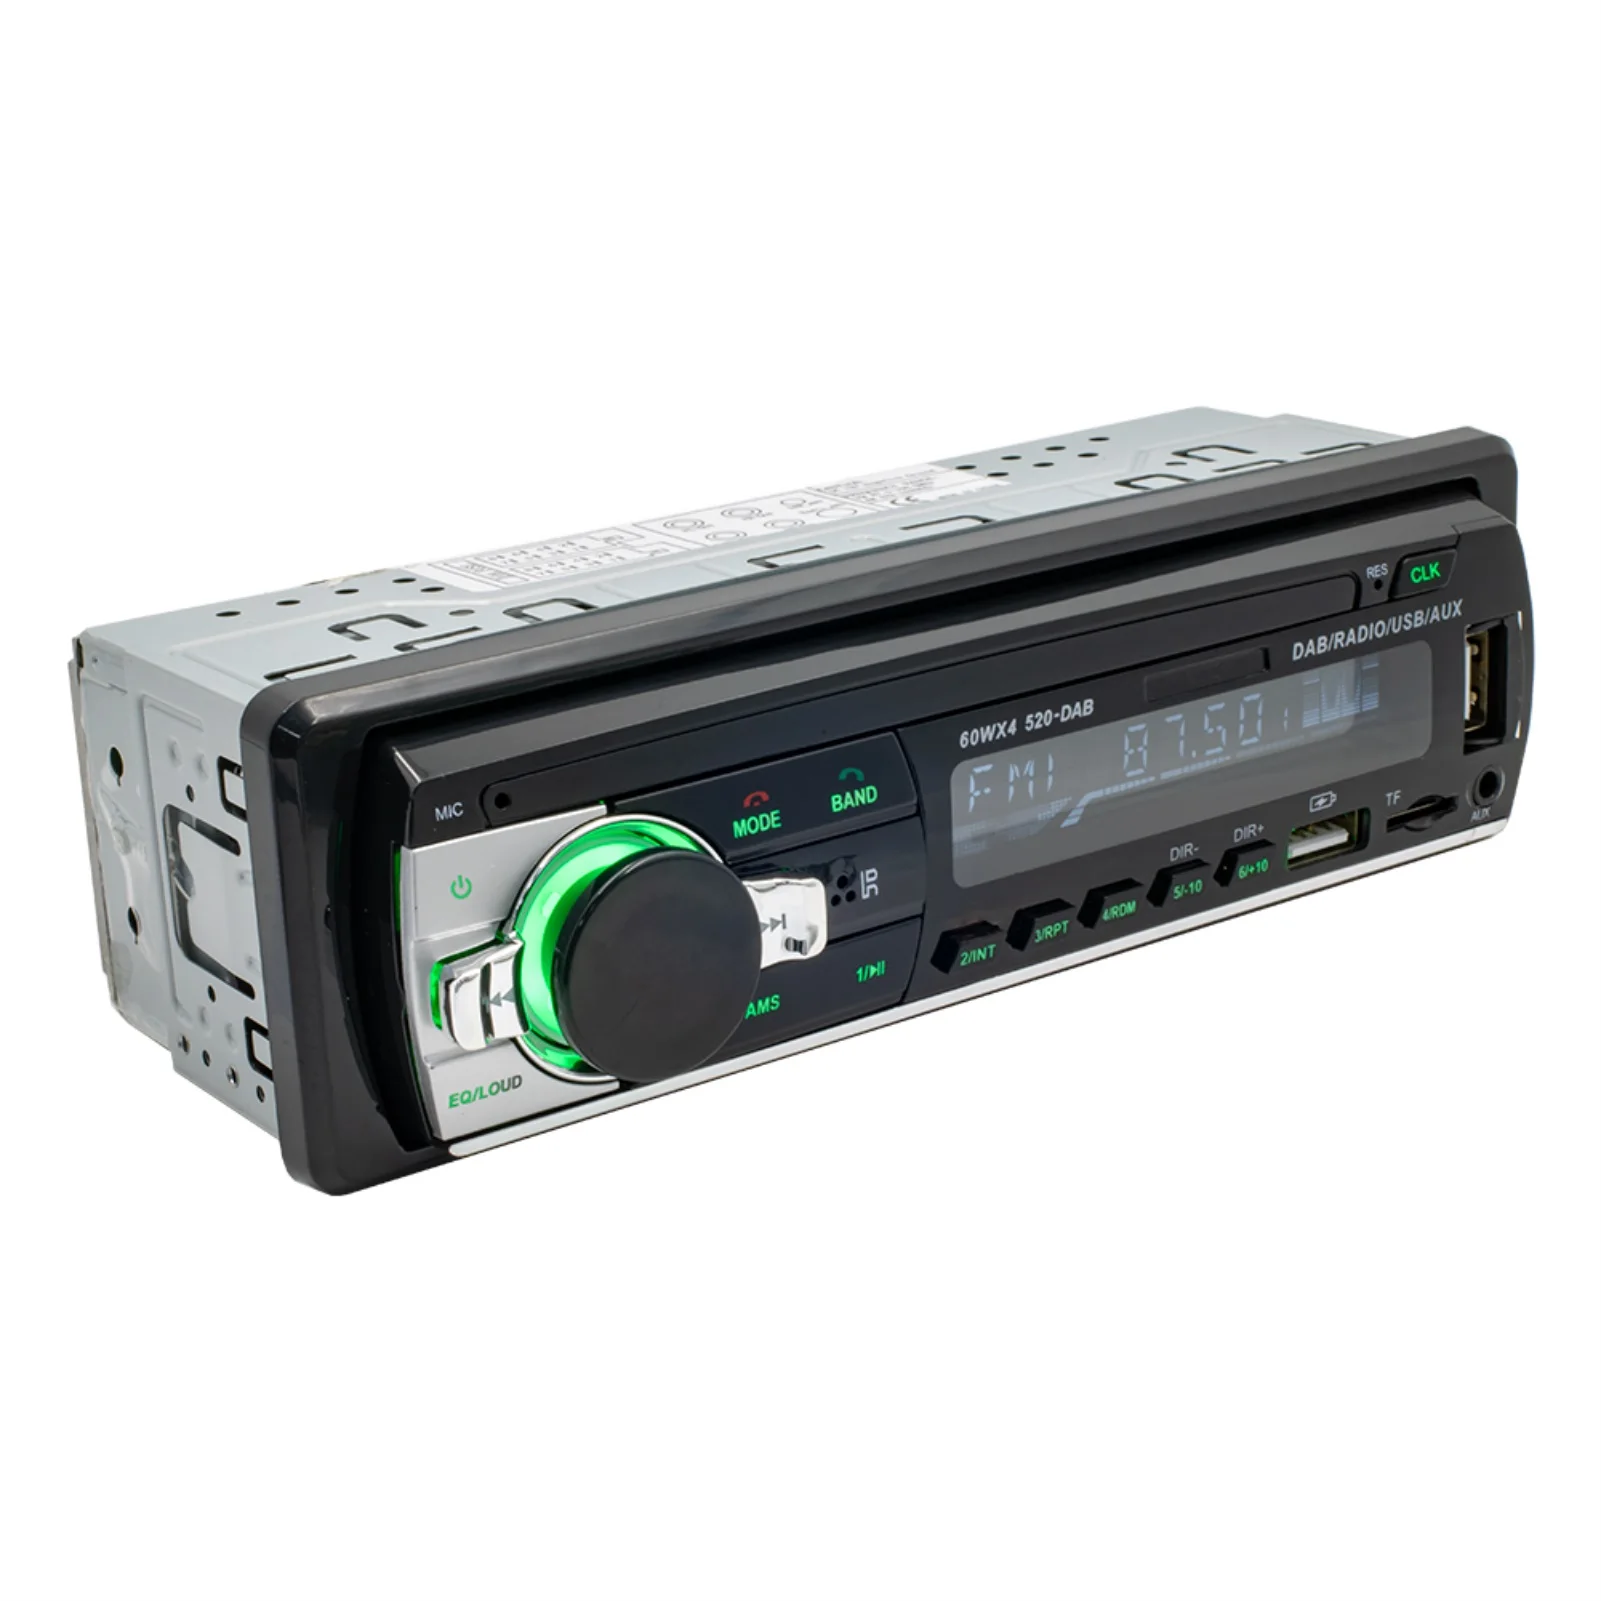 

1 DIN Car Radio FM Autoradio AUX-in TF U Disk MP3 Player Handfree Auto Stereo Multimedia Audio In Dash Head Unit